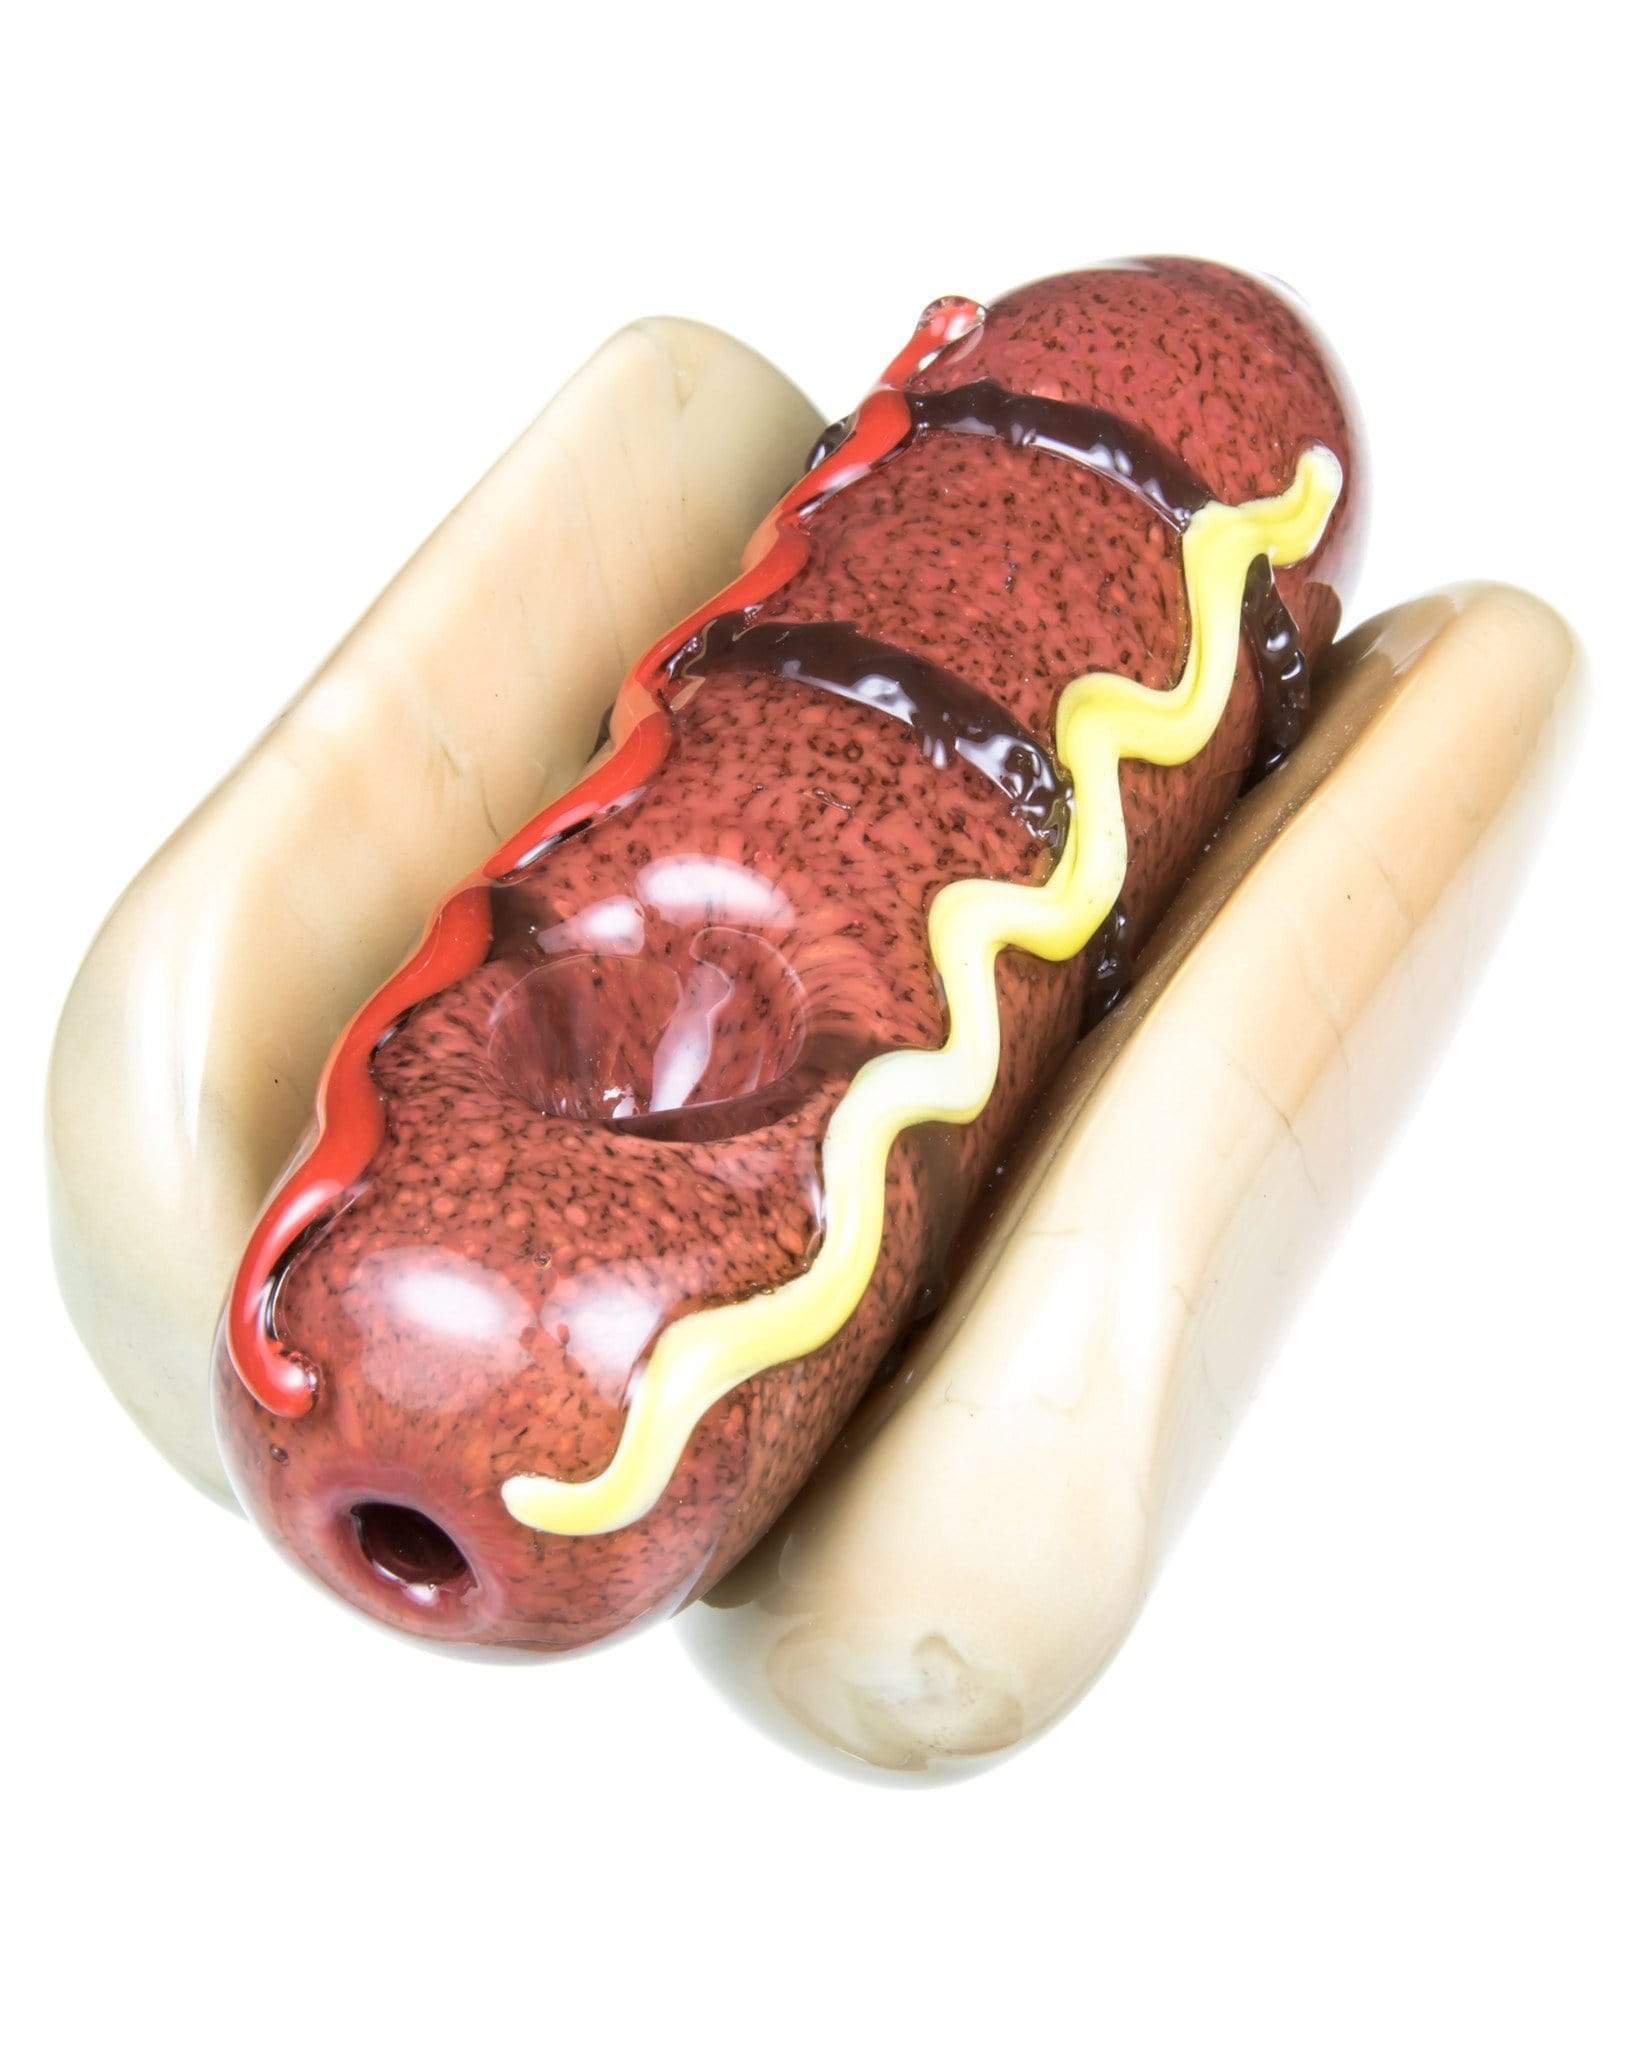 hot dog hand pipe